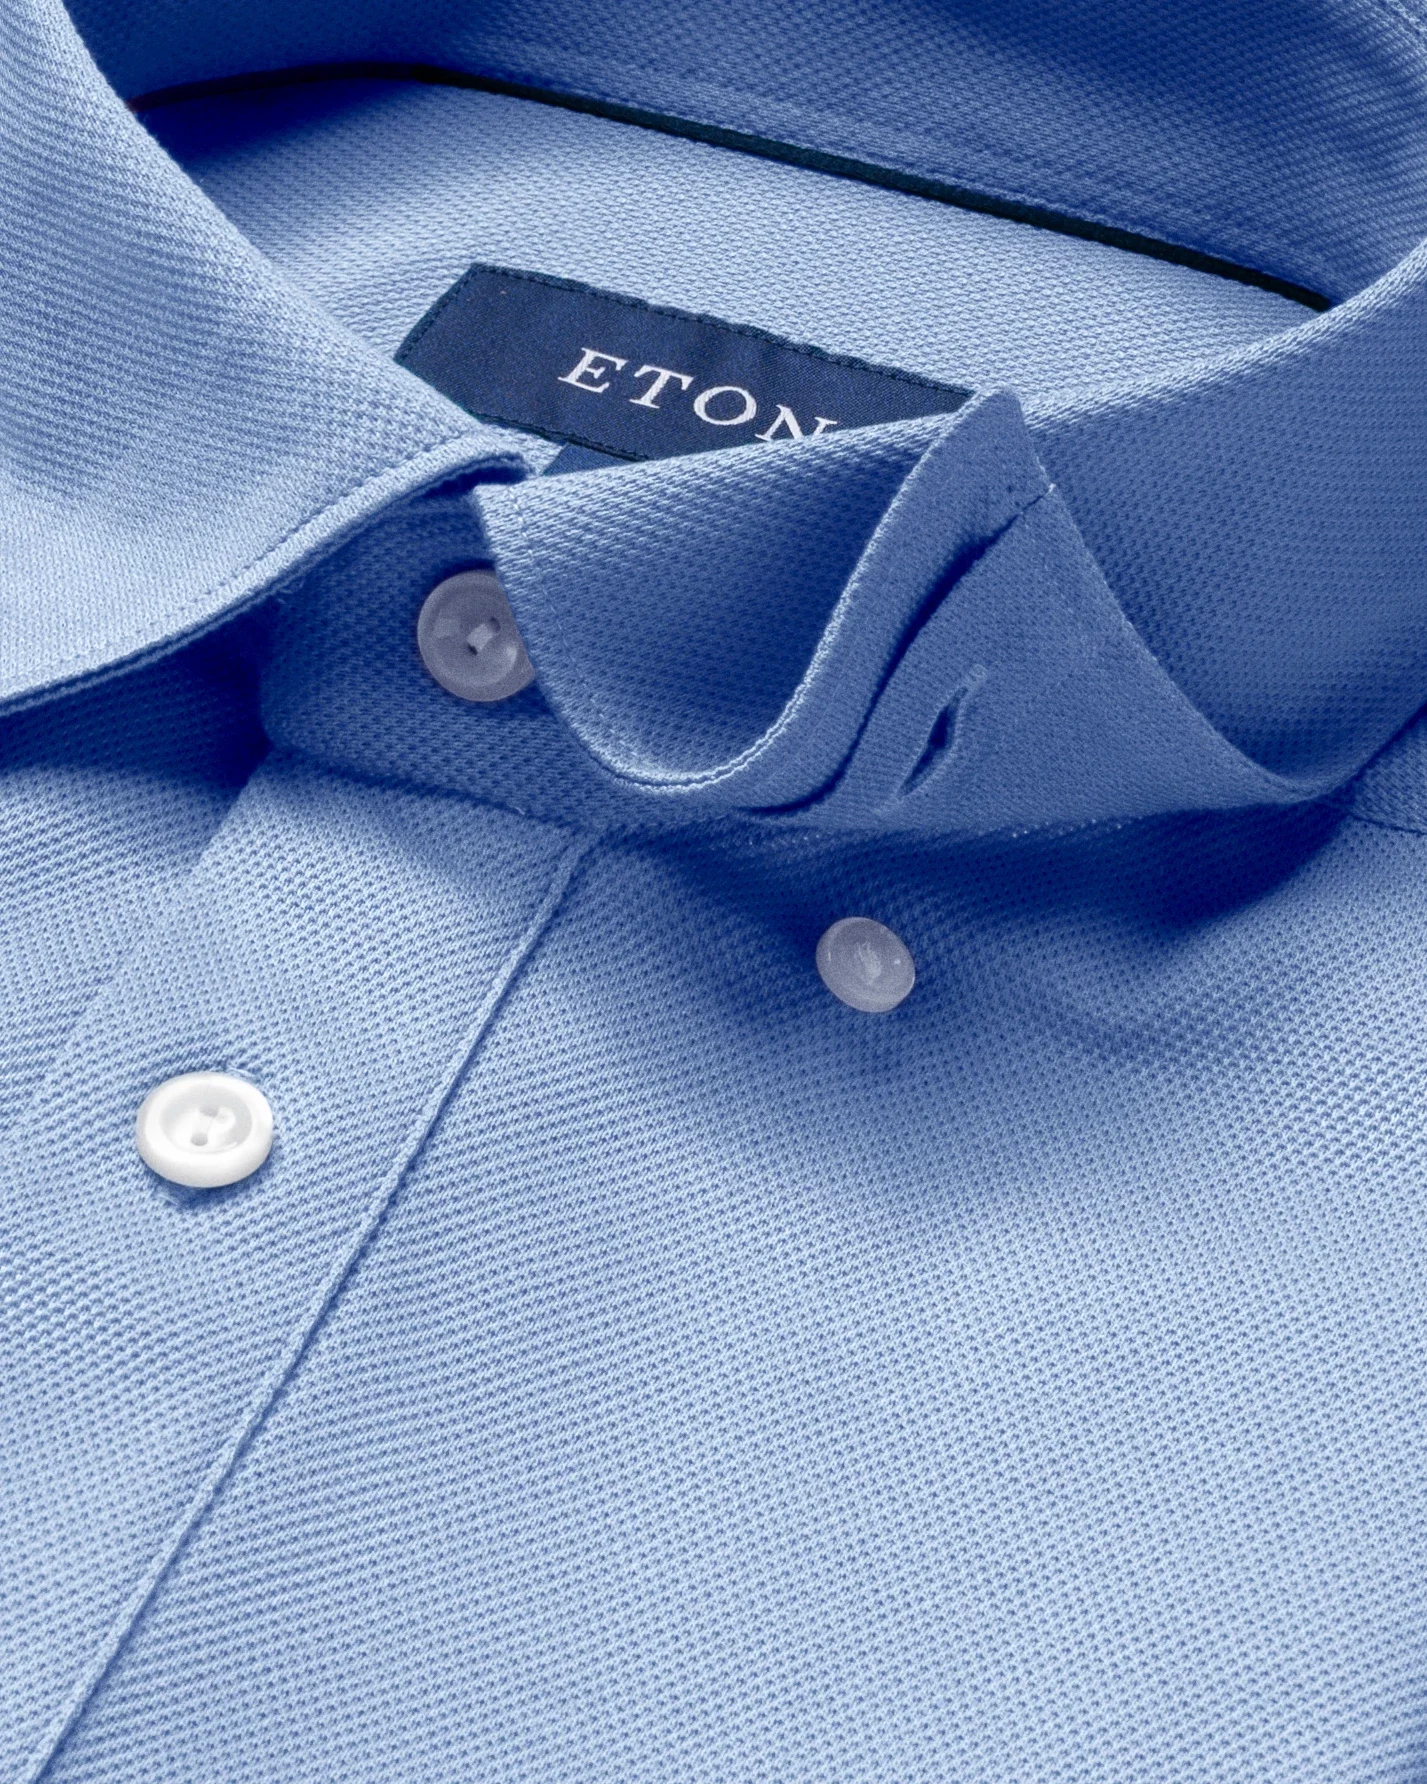 Eton - blue polo shirt short sleeved